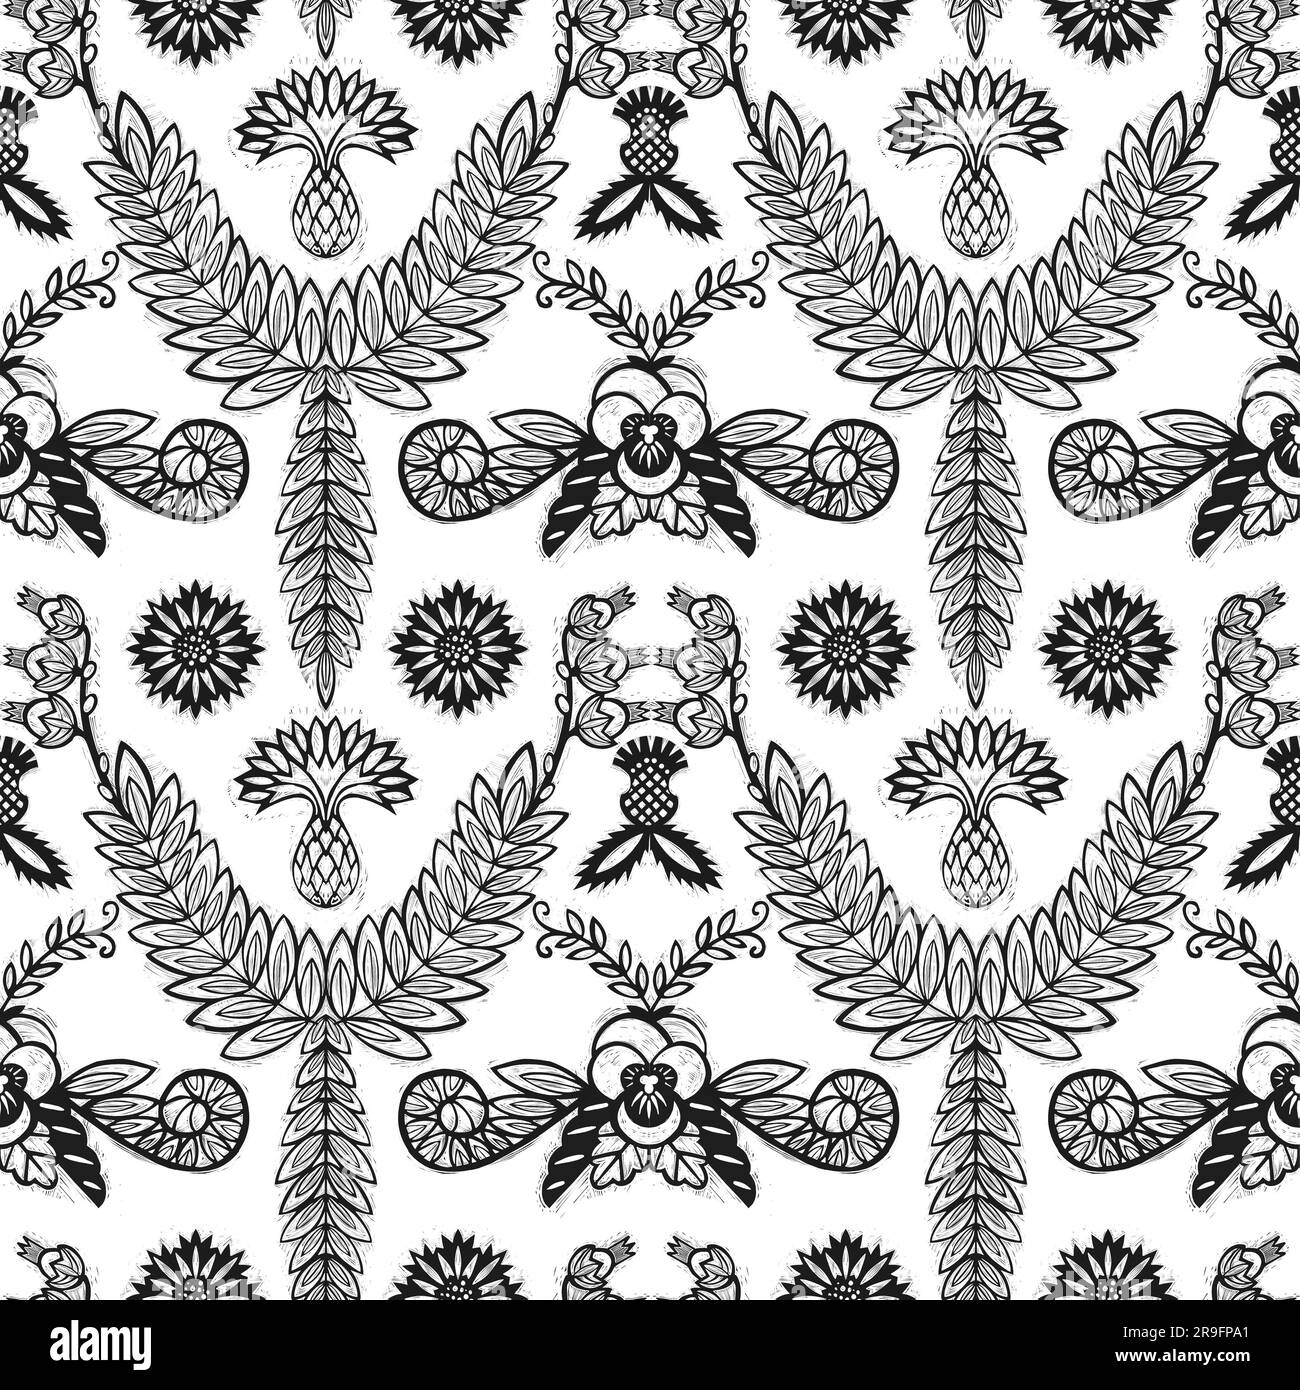 Spear Thistle Linocut Block Print Wild Flower Black and White Floral  Artwork 